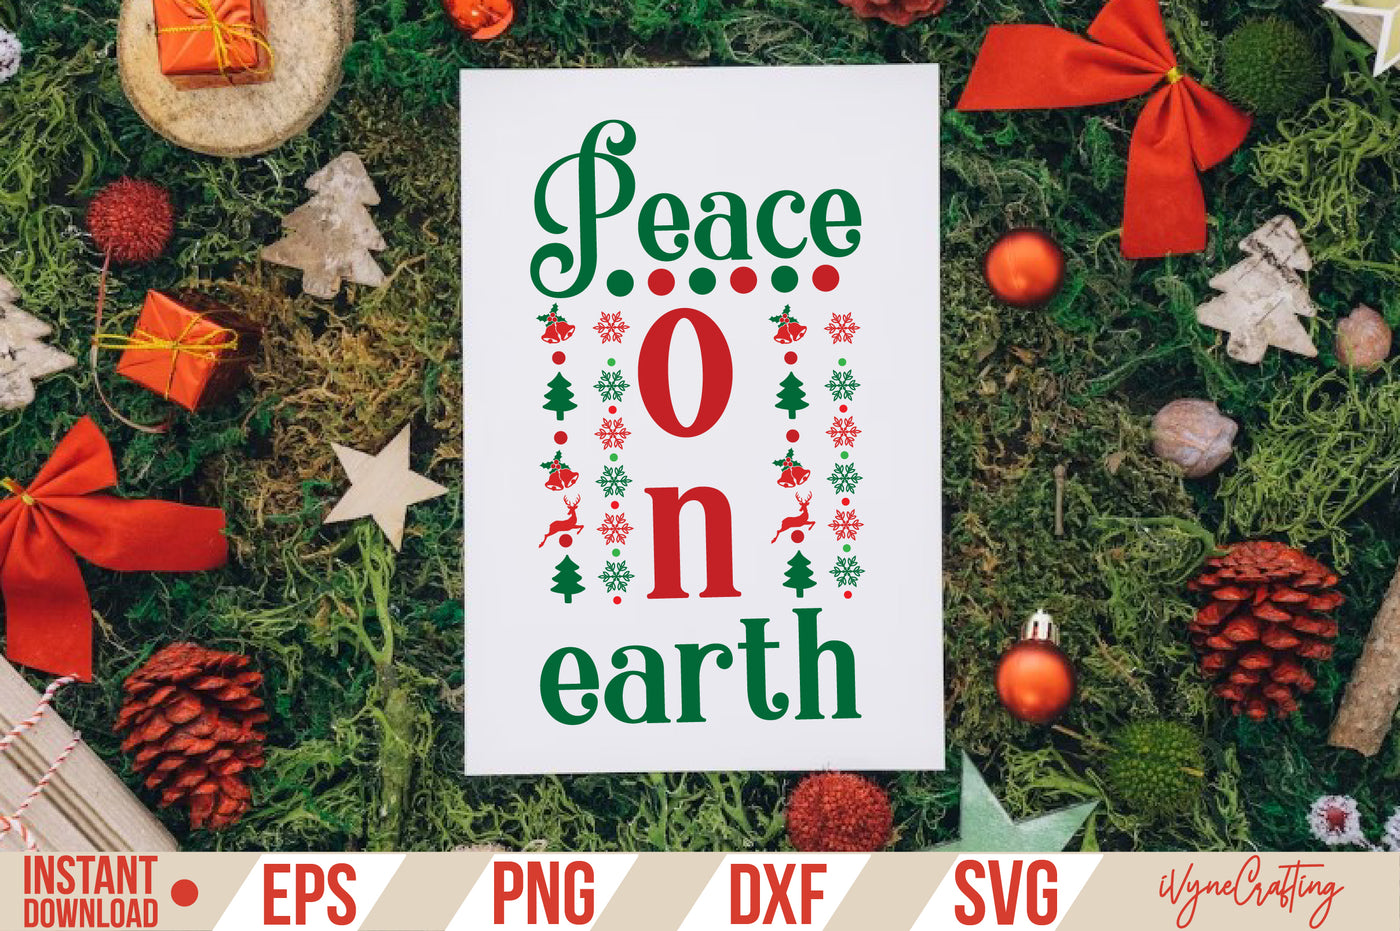 Peace on earth SVG Cut File